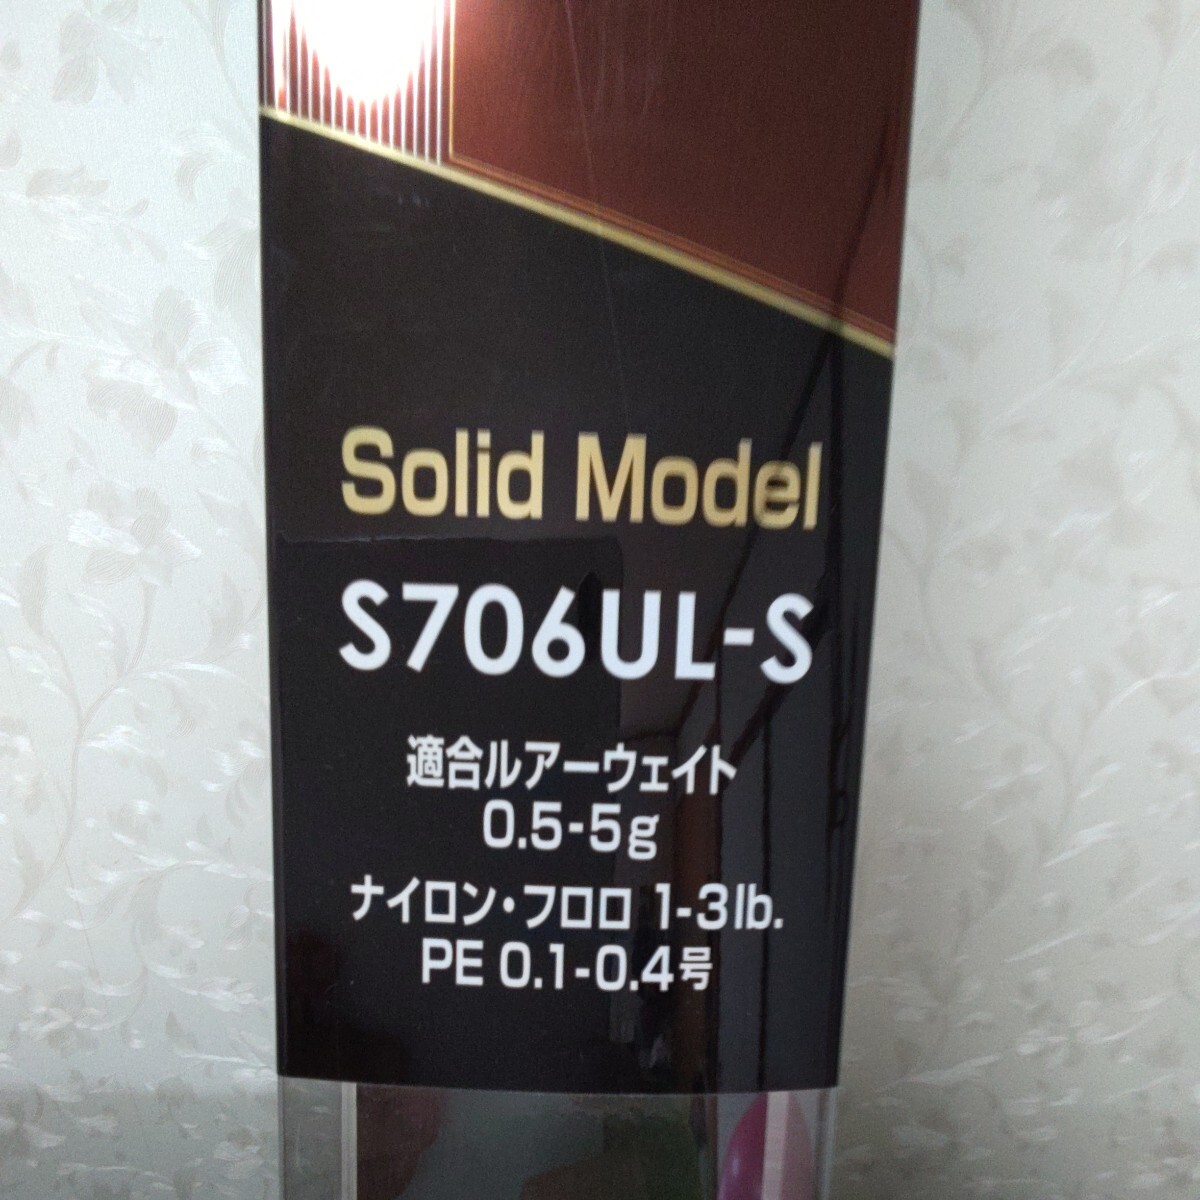  Shimano Thor reCI4+ S706UL-S [ включая доставку цена ]